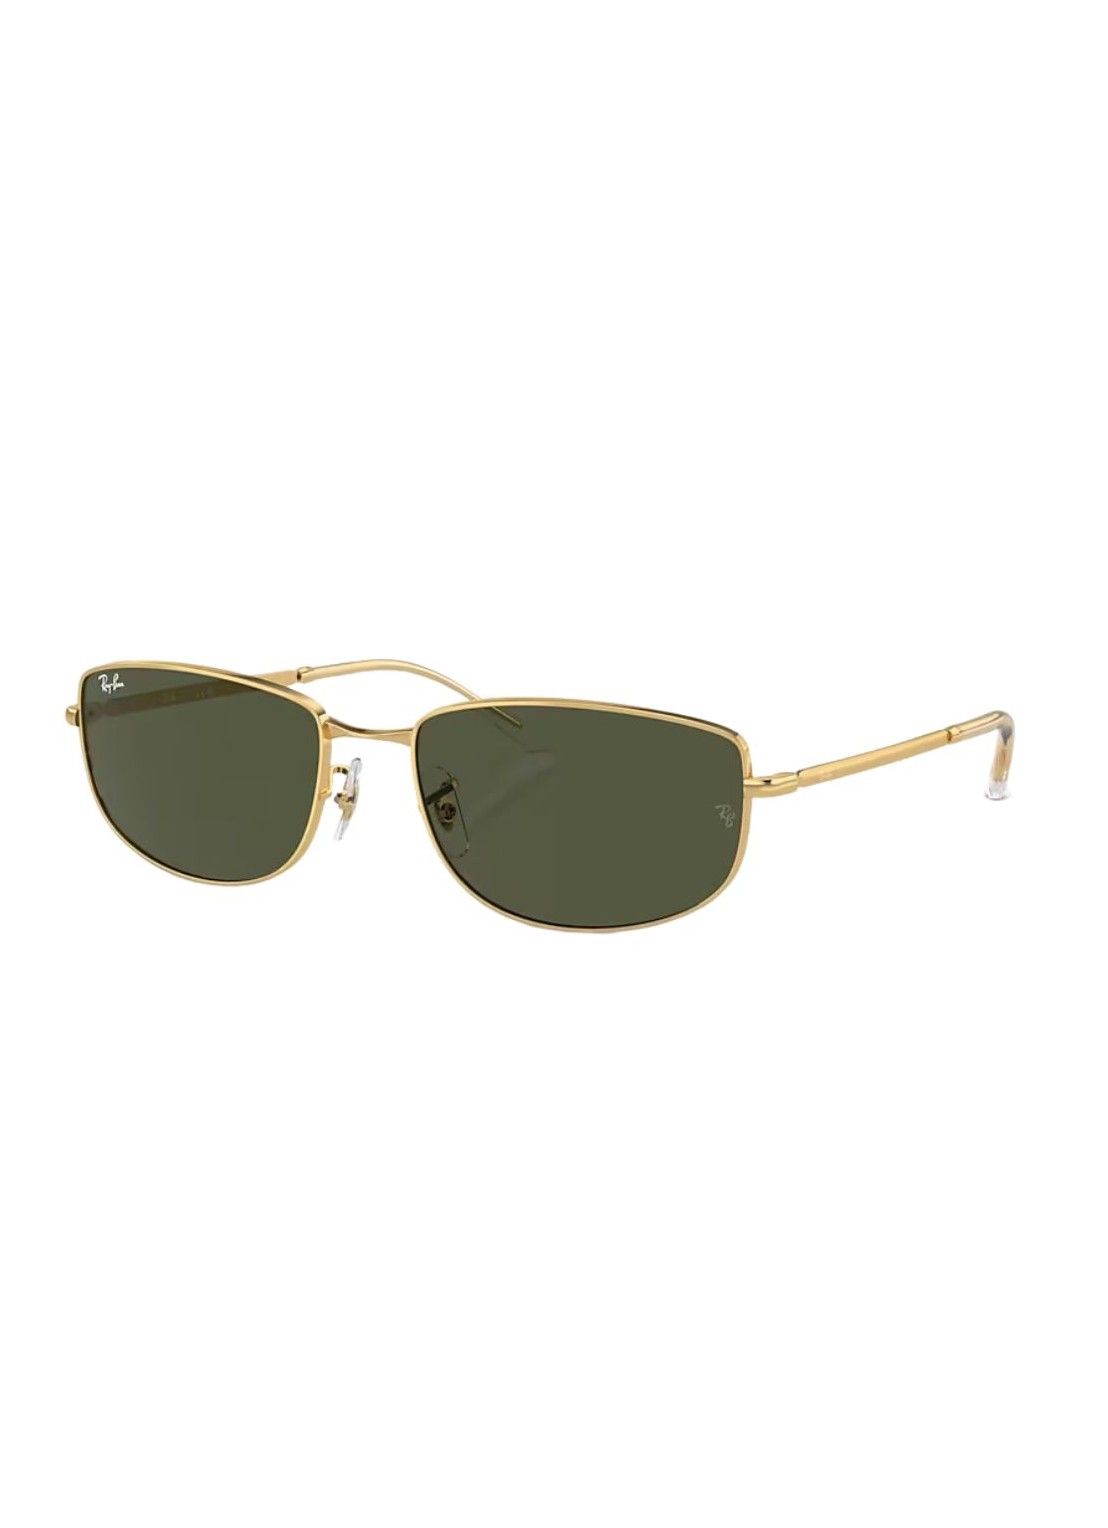 Gafas rayban sunglasses unisex0rb3732 - 0rb3732 001/31 talla transparente
 